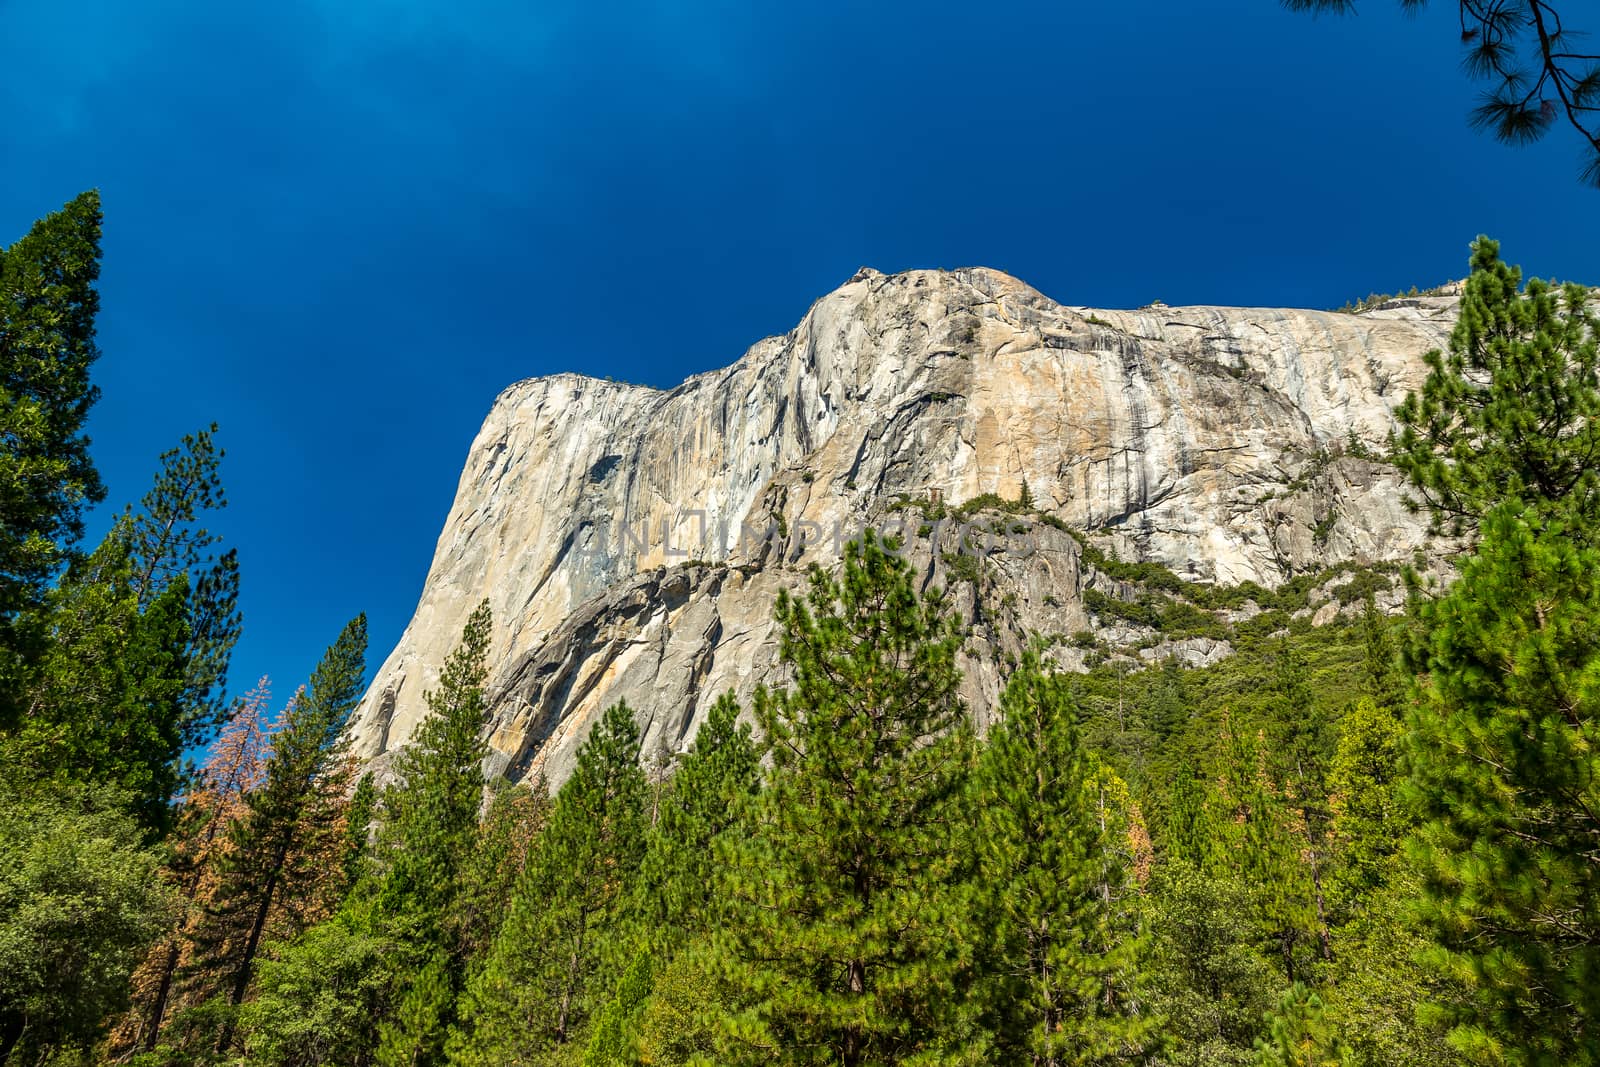 El Capitan Yosemite by adifferentbrian